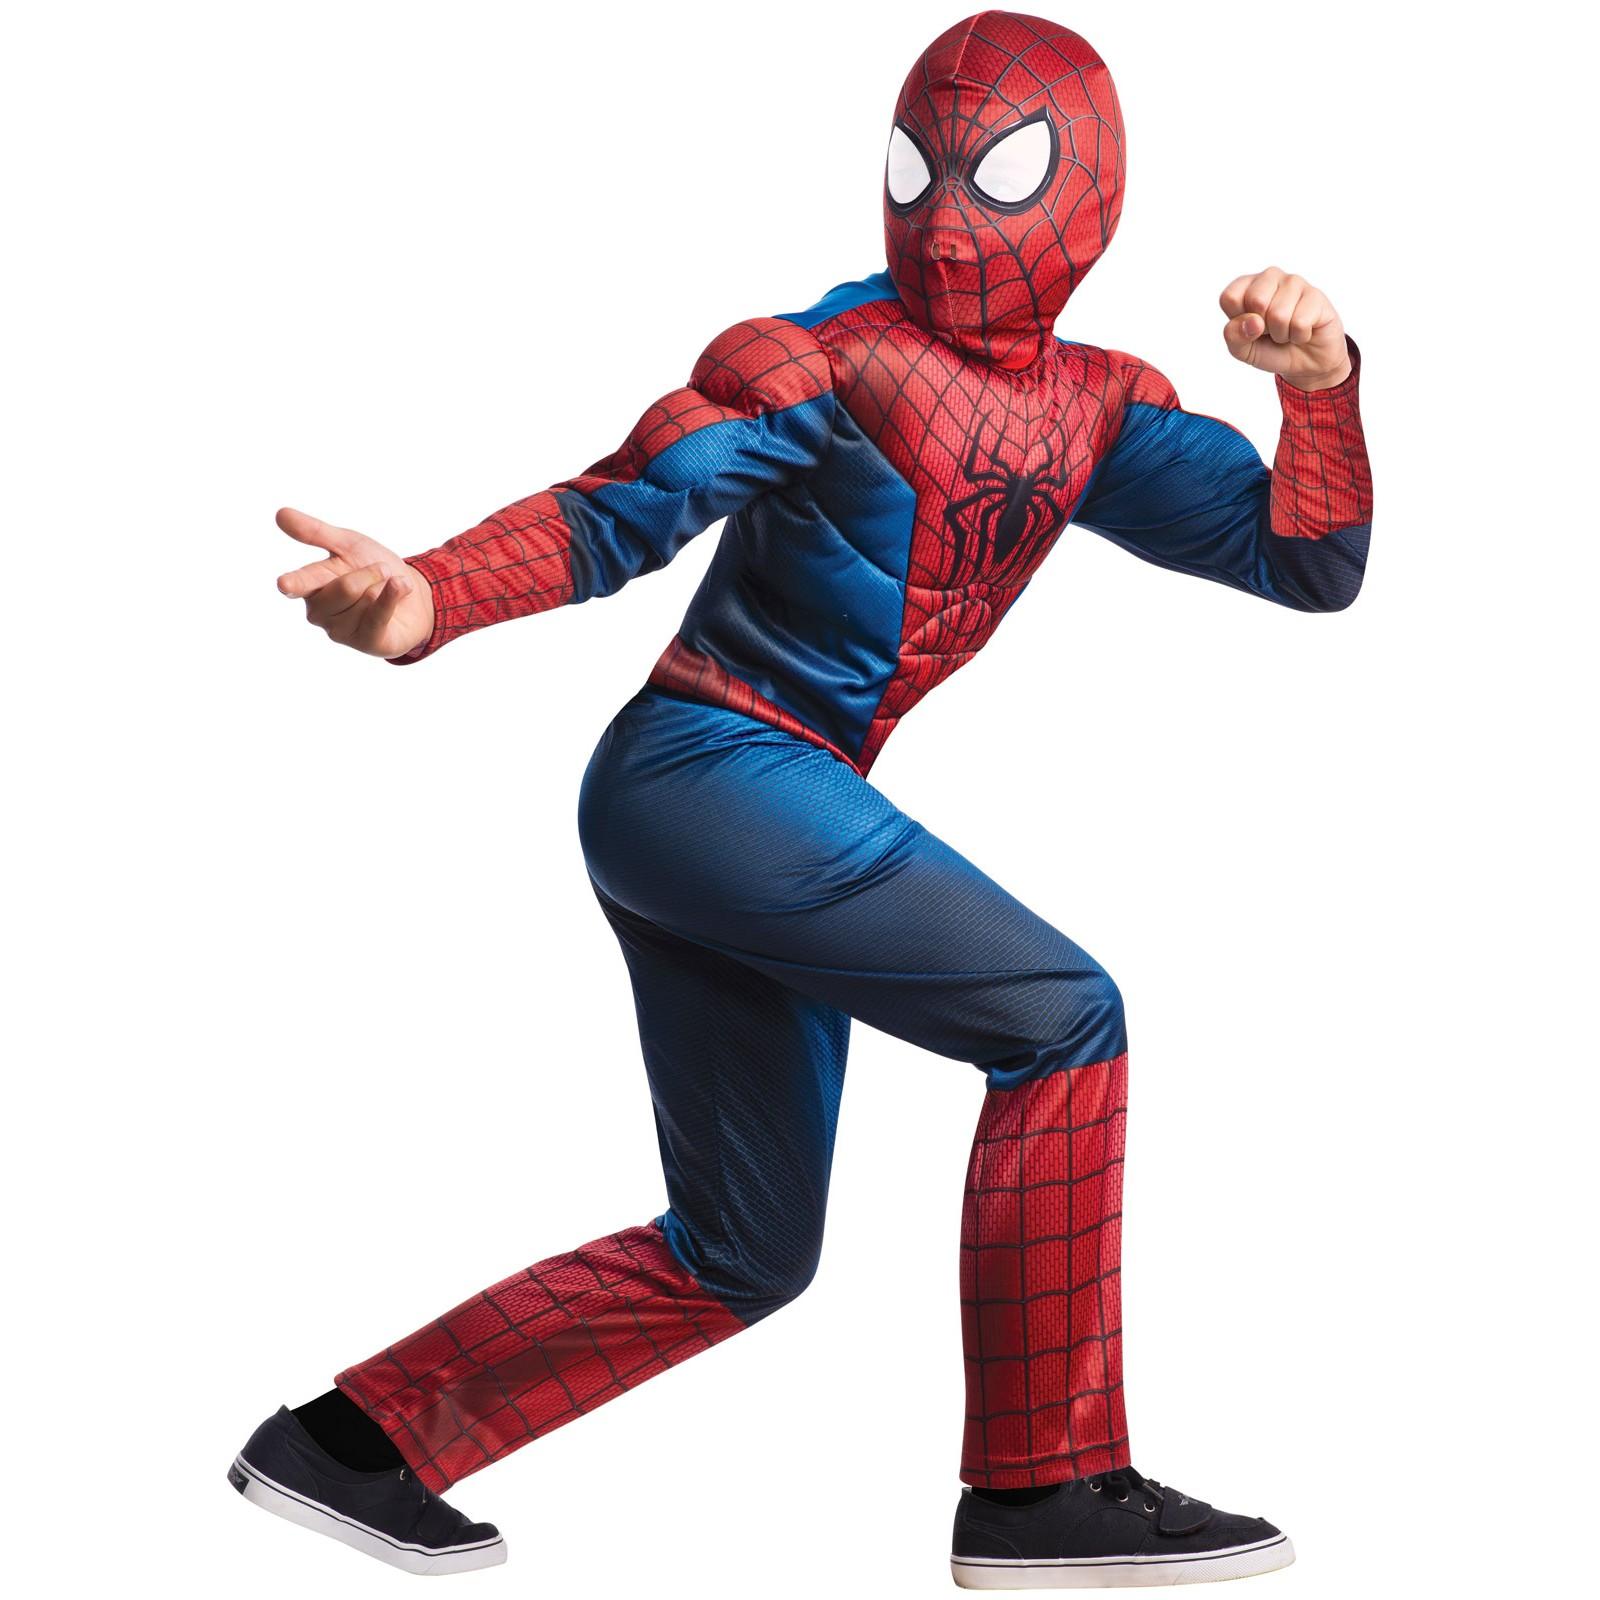 OFERTA SPECIALA Costum Spider cu muschi, pentru copii + Manusa cu lansator si 2 sageti